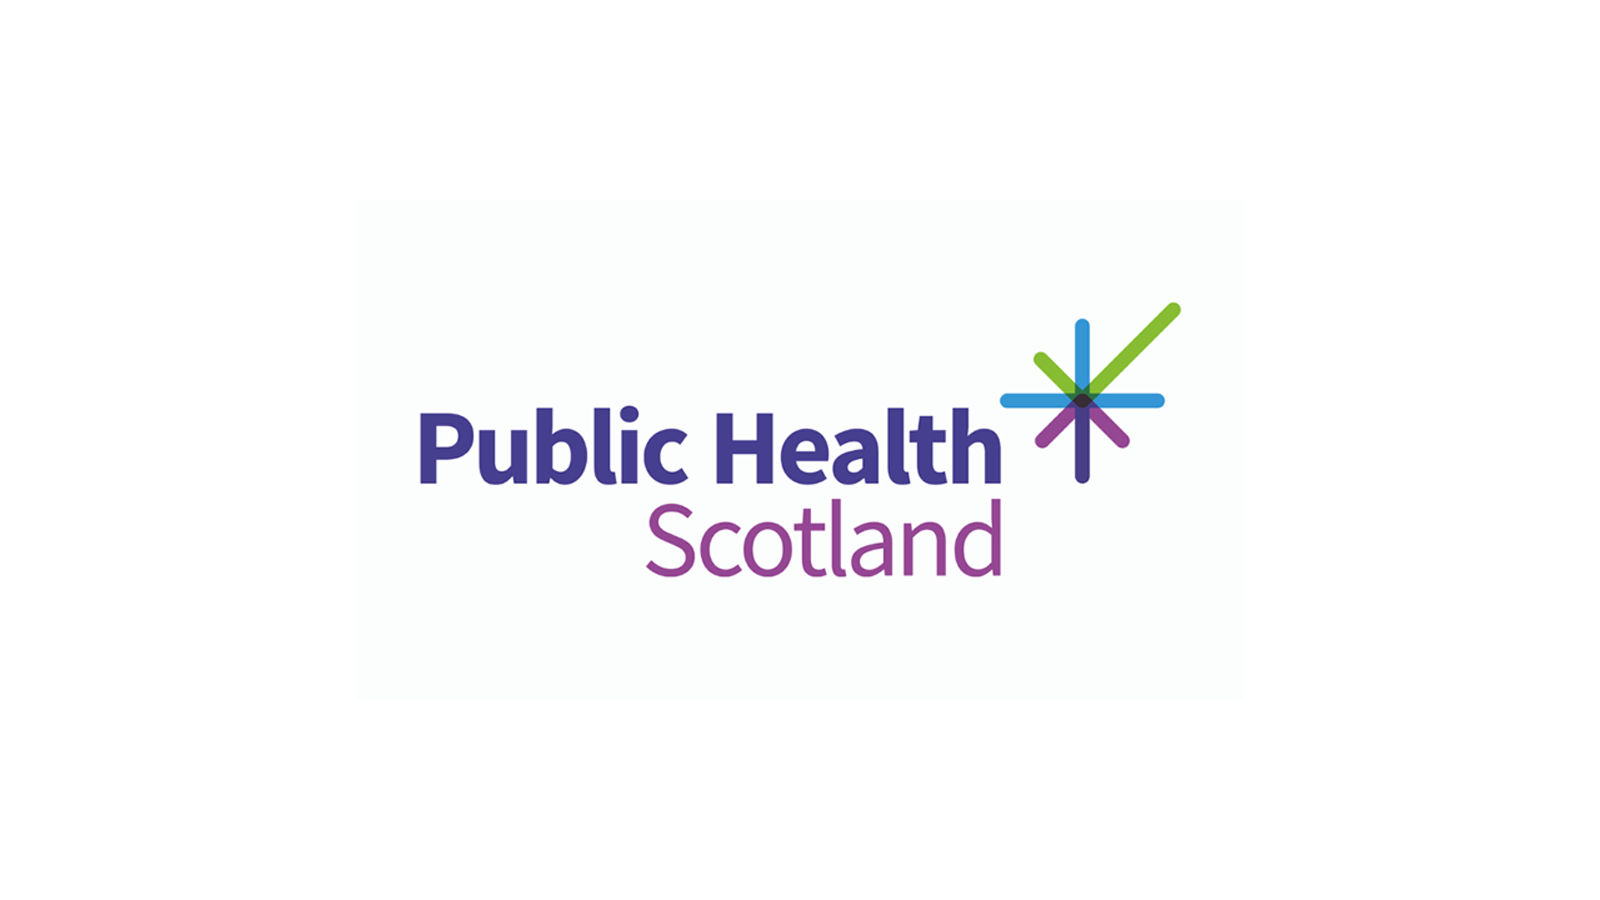 Visit Public Health Scotland